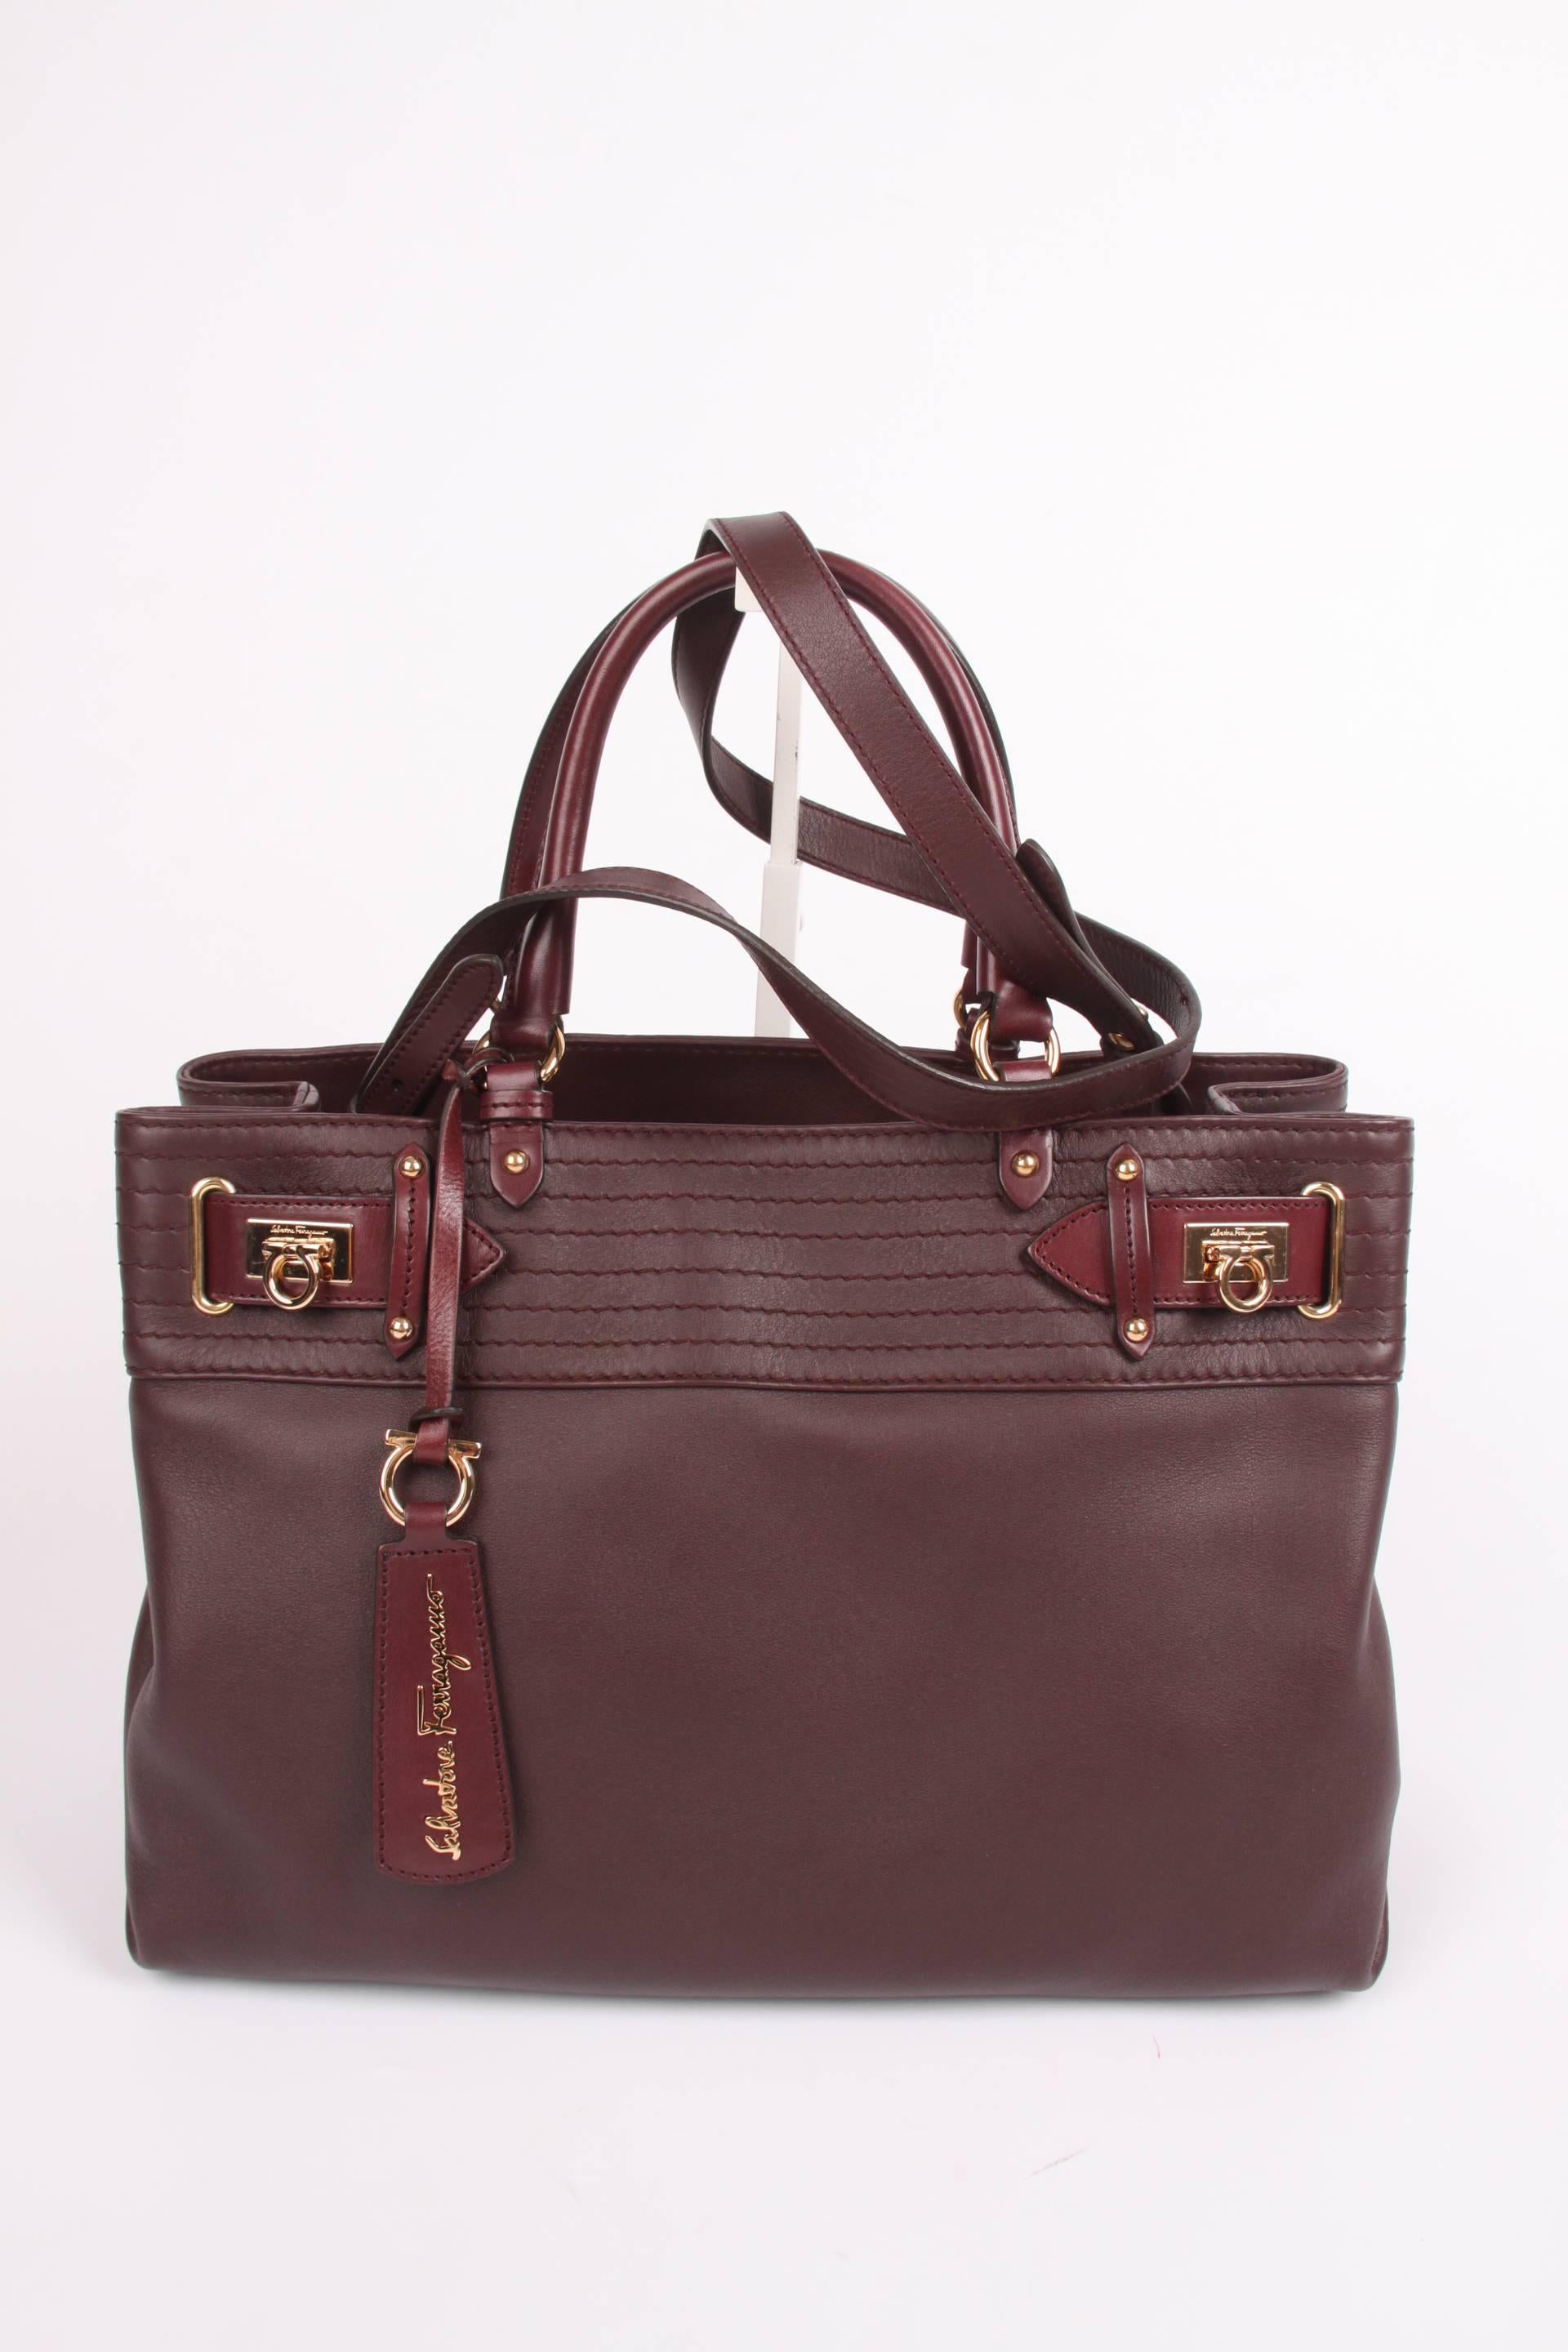 Salvatore Ferragamo Leather Buckled Tote Bag Visone - burgundy red 3